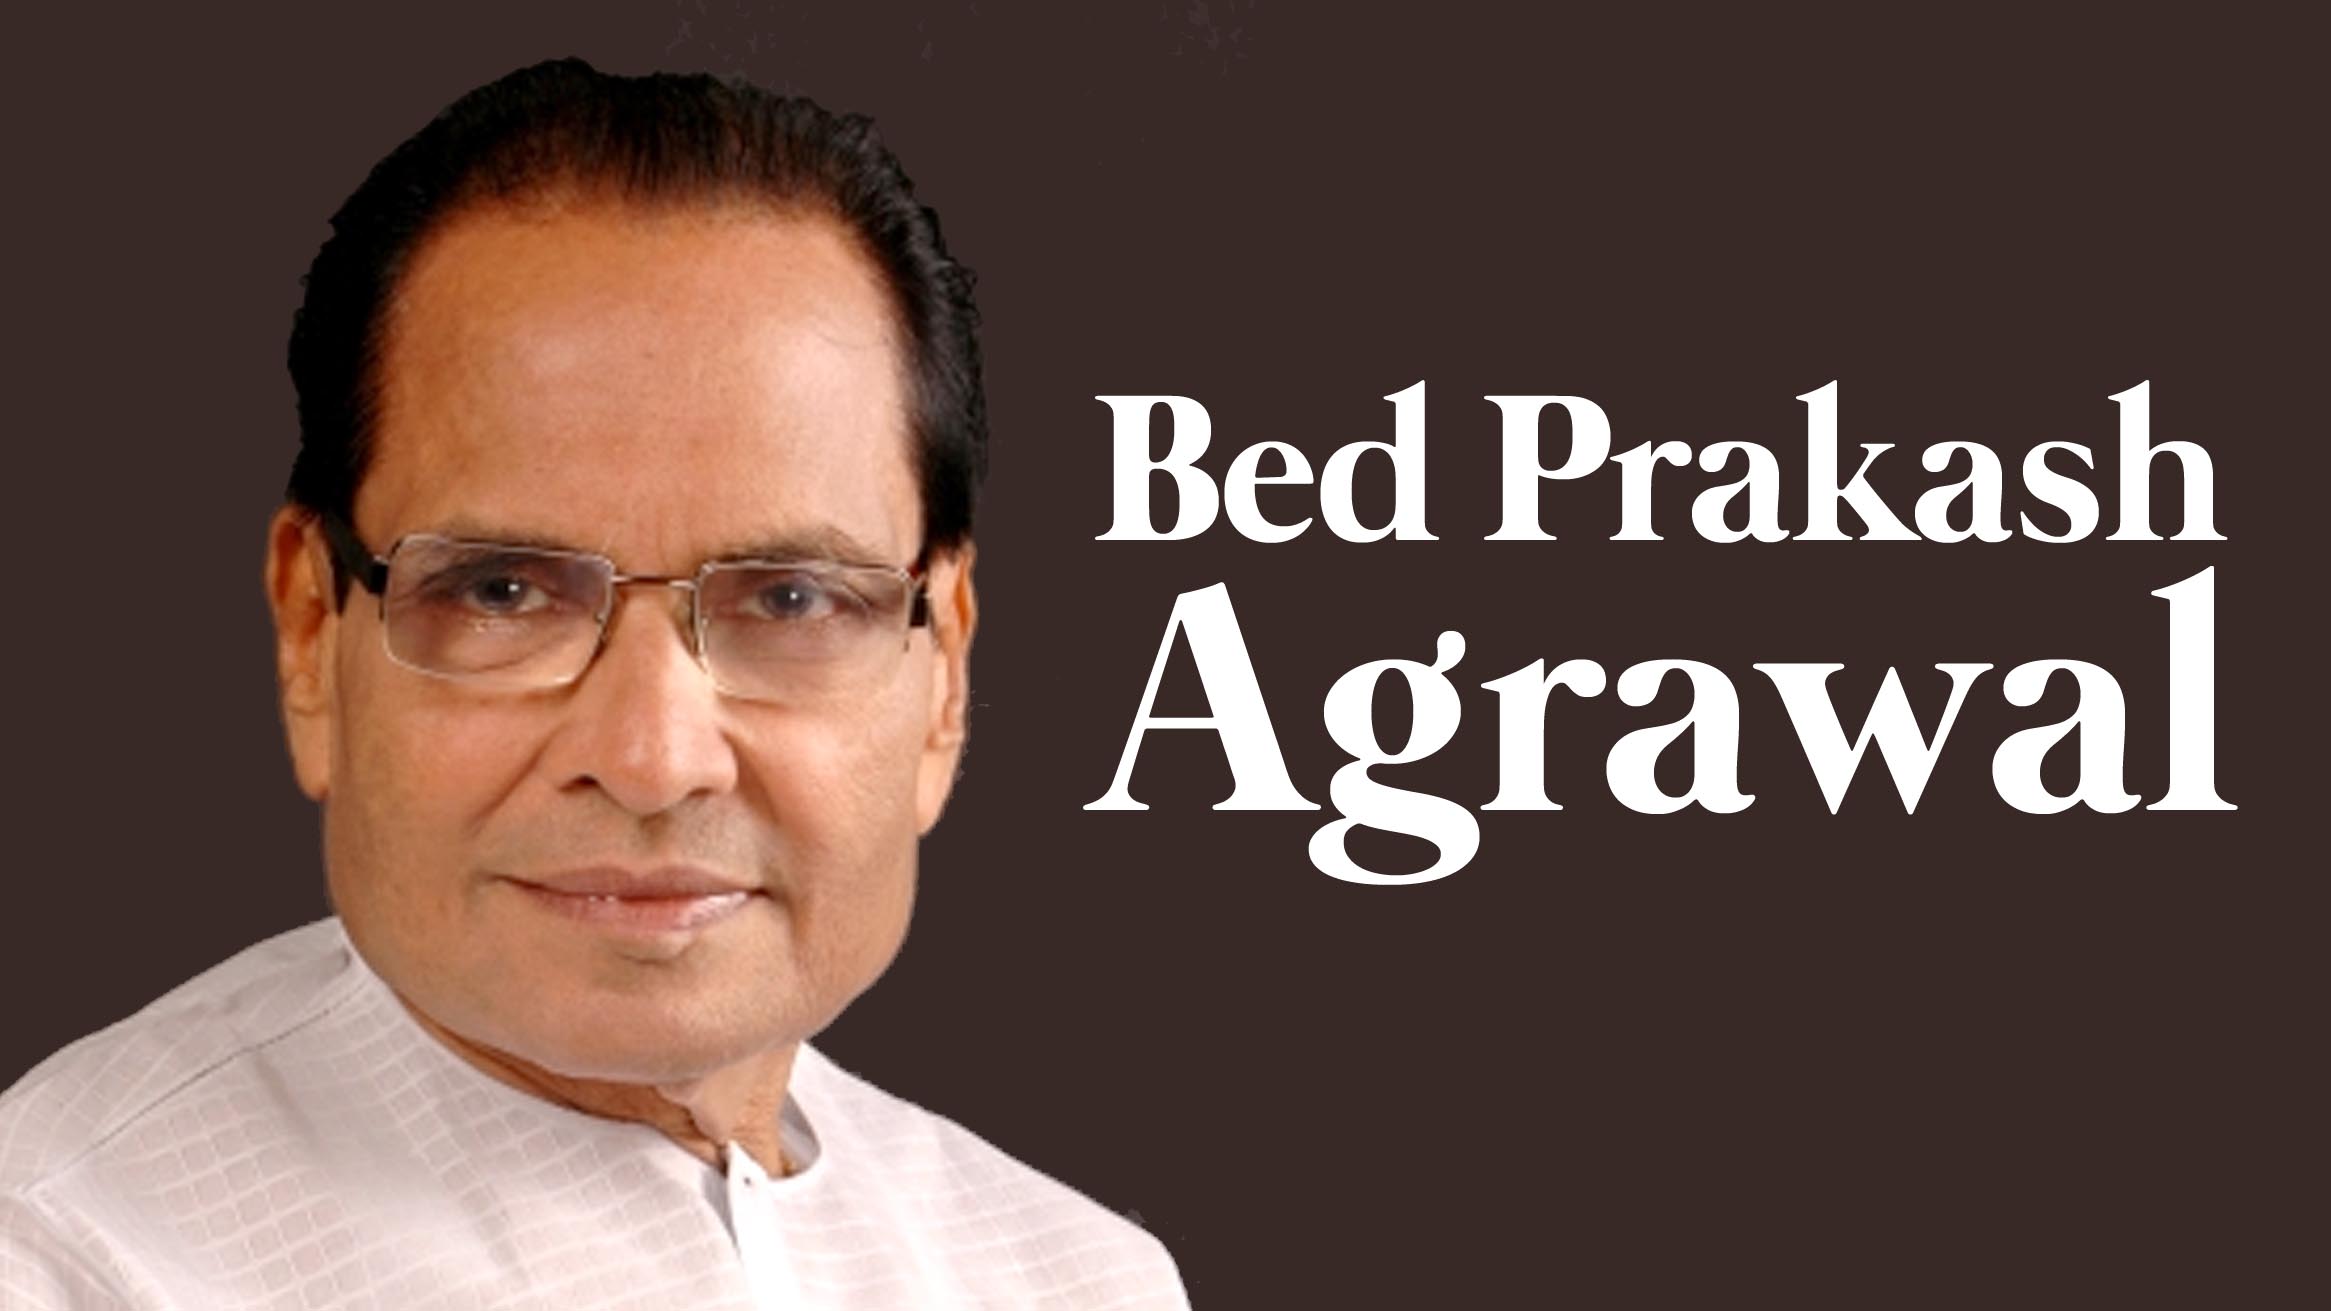 Bed Prakash Agrawal